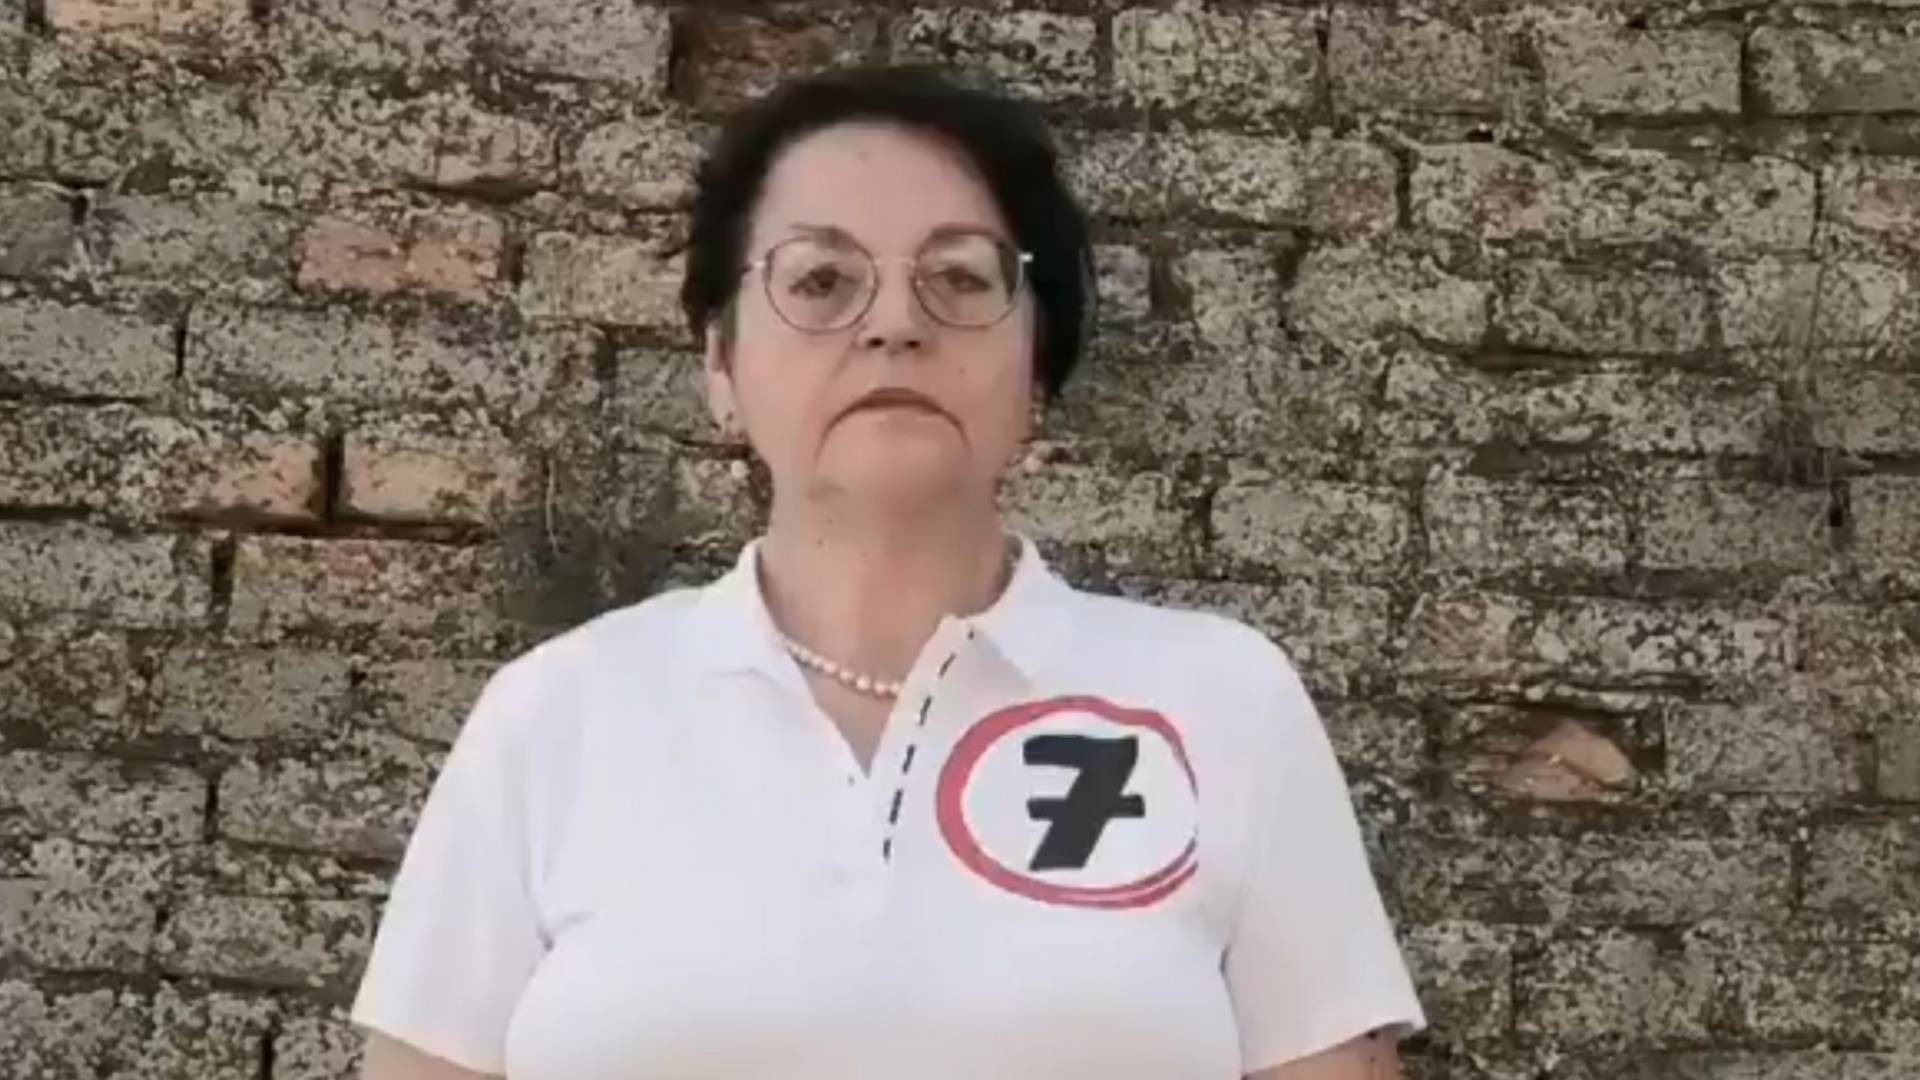 Gordana Čomić celoj državi pokazala srednji prst na svom fejk streljanju